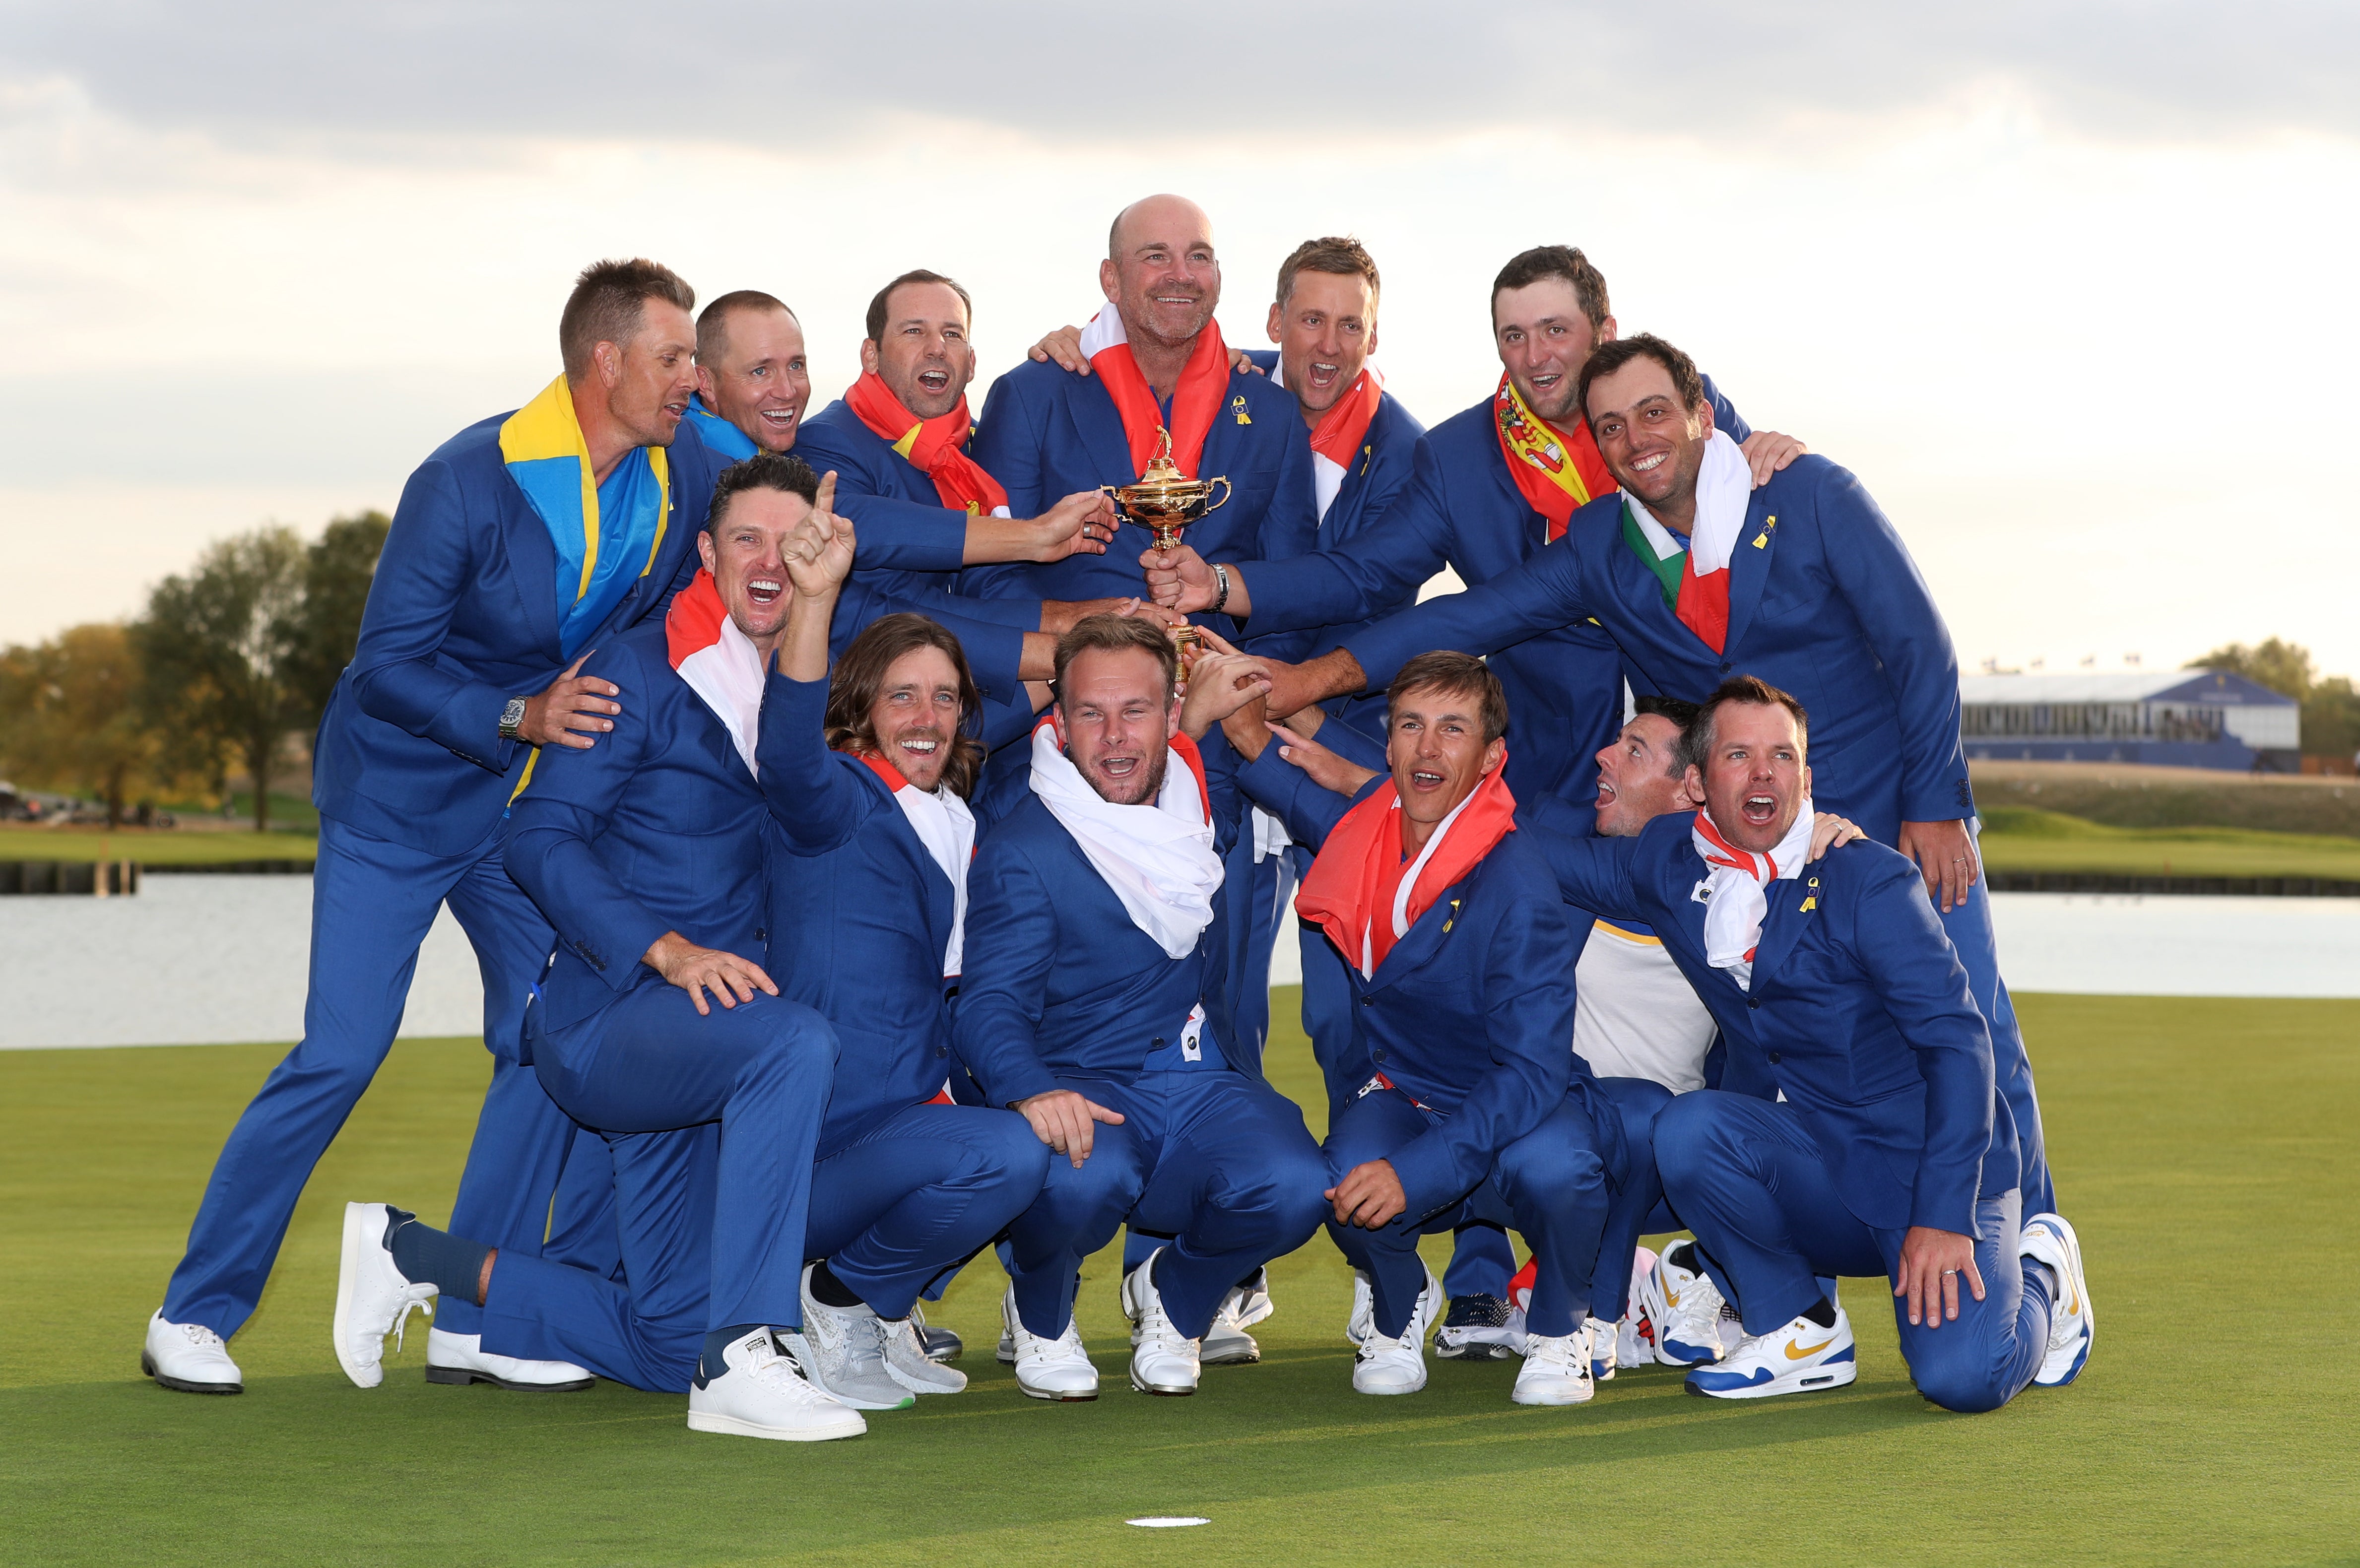 Europe celebrate winning the Ryder Cup at Le Golf National, Paris (David Davies/PA)